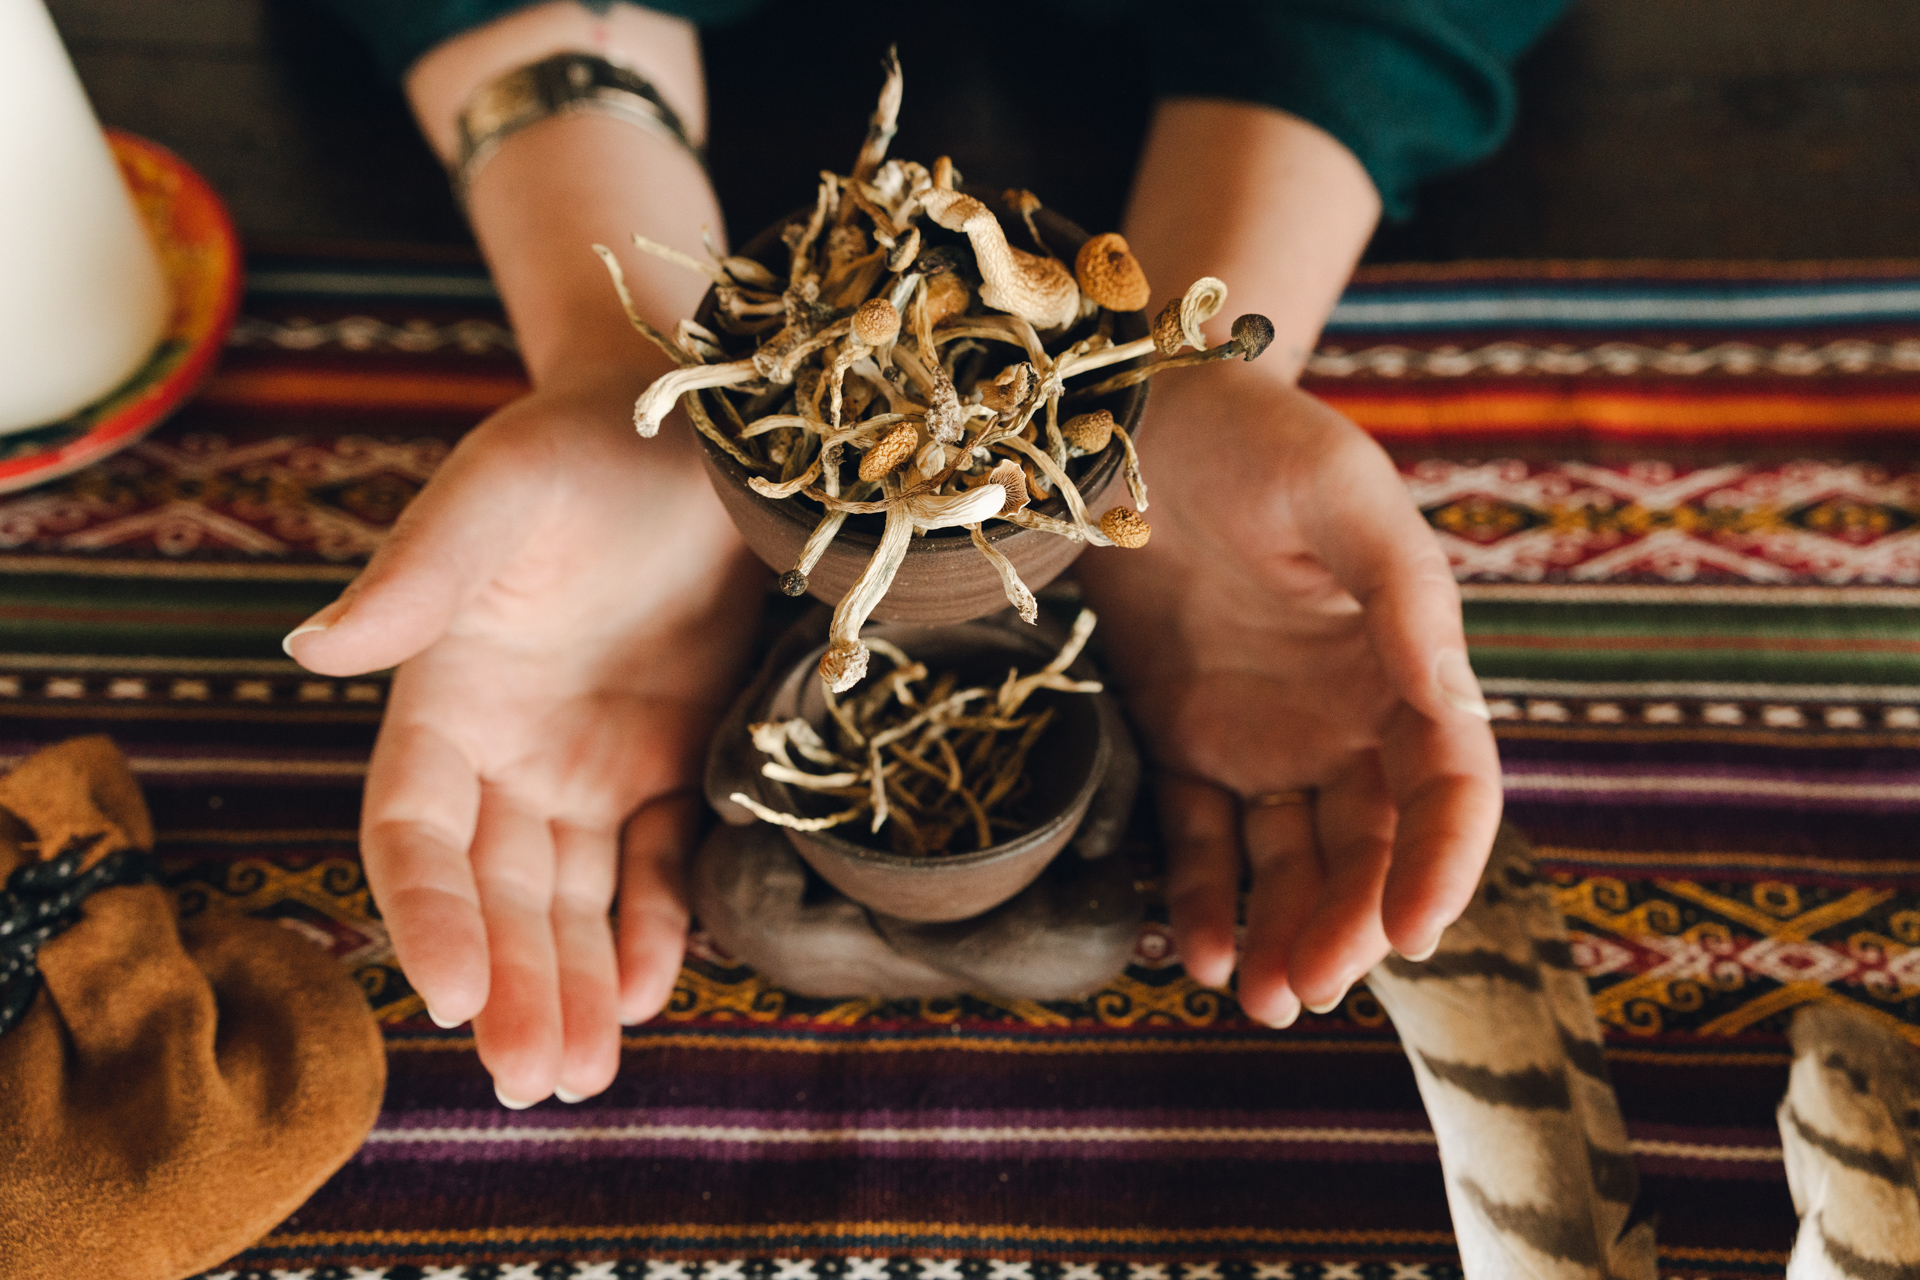 Woman's hands cupping a bowl of psilocybin mushrooms